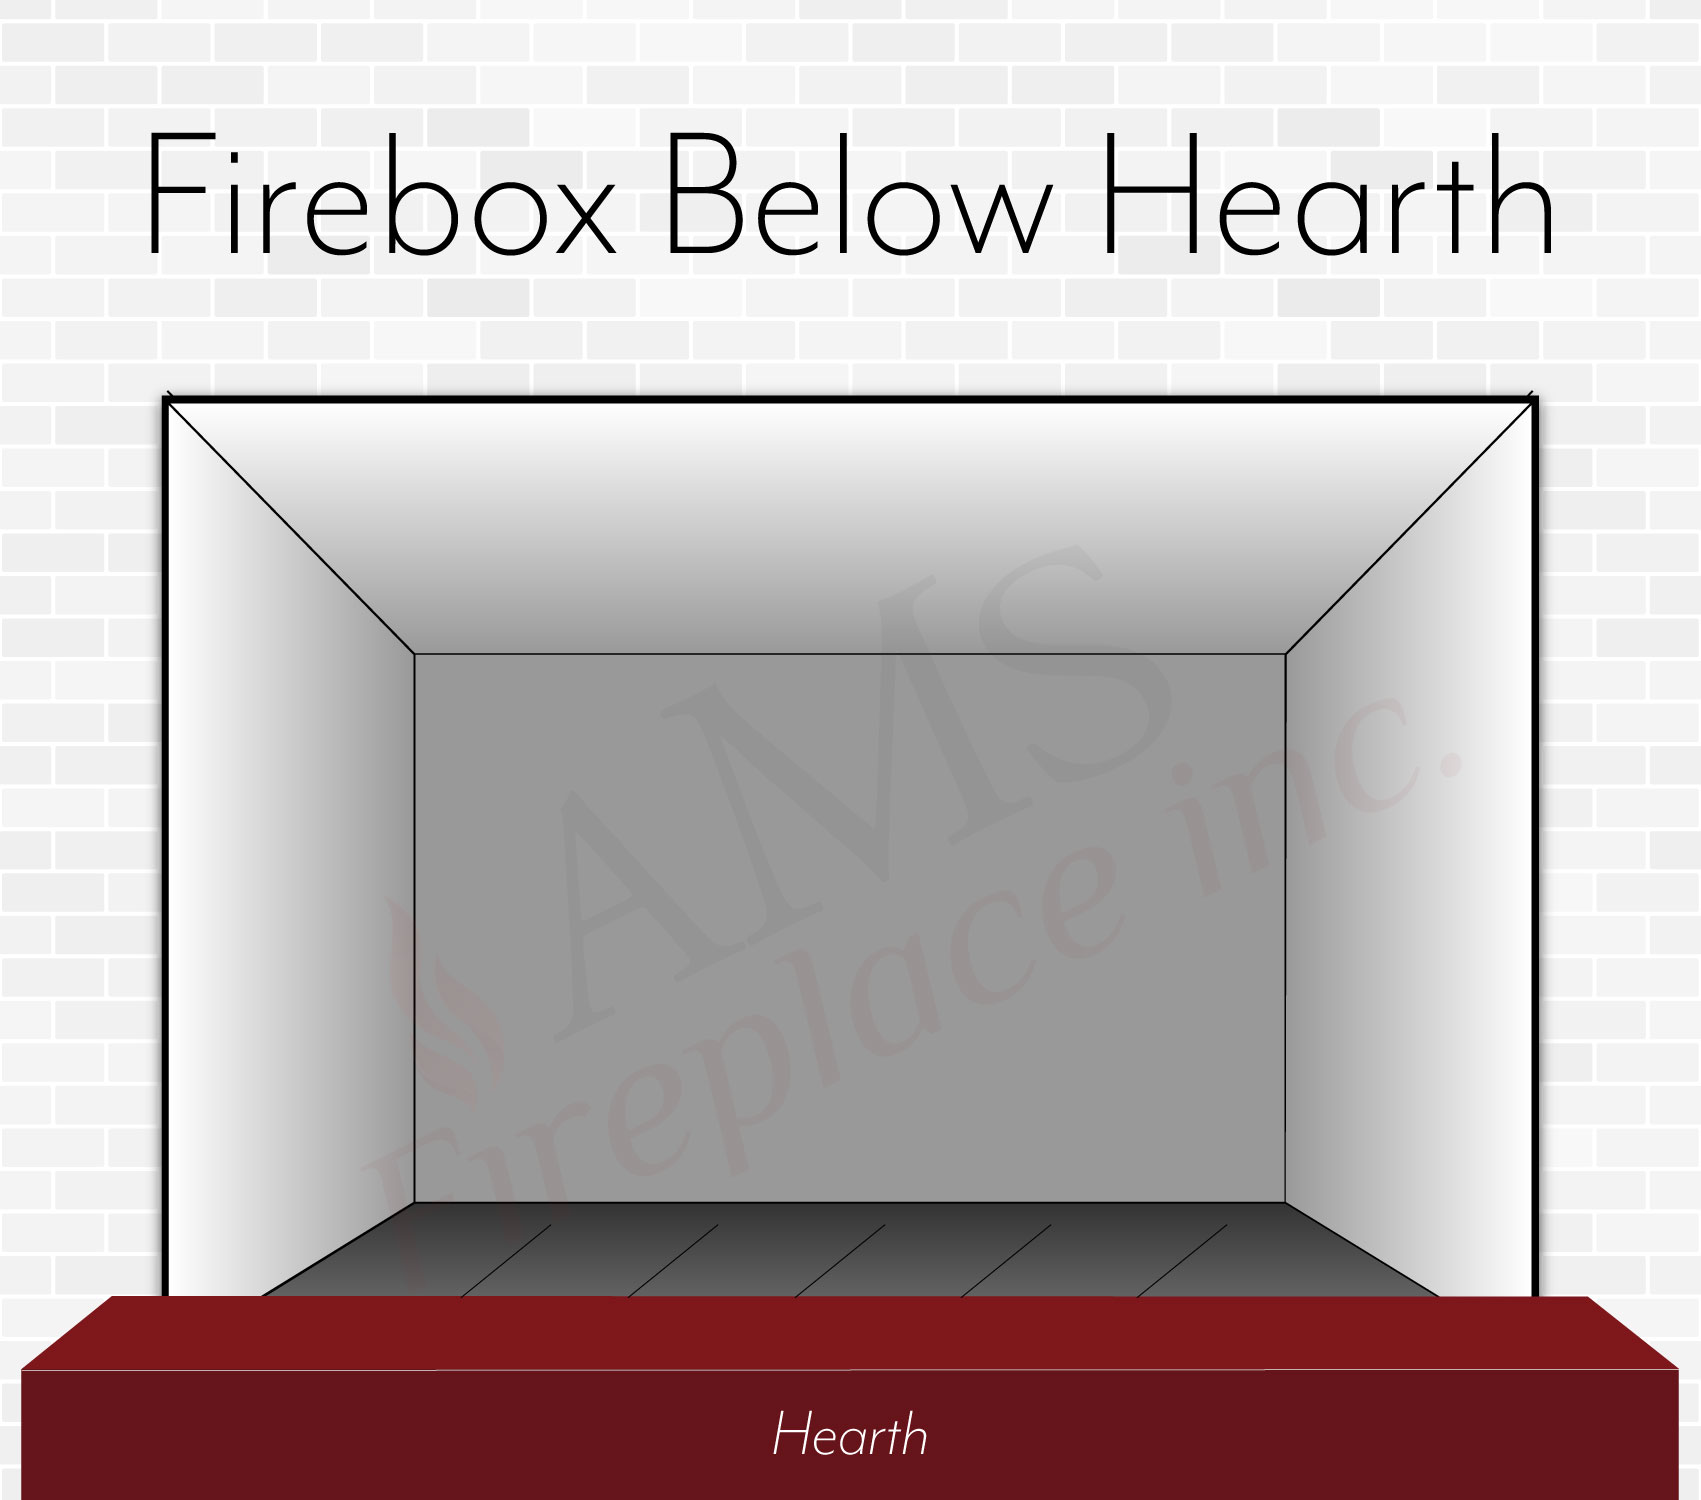 Firebox is Below the Hearth